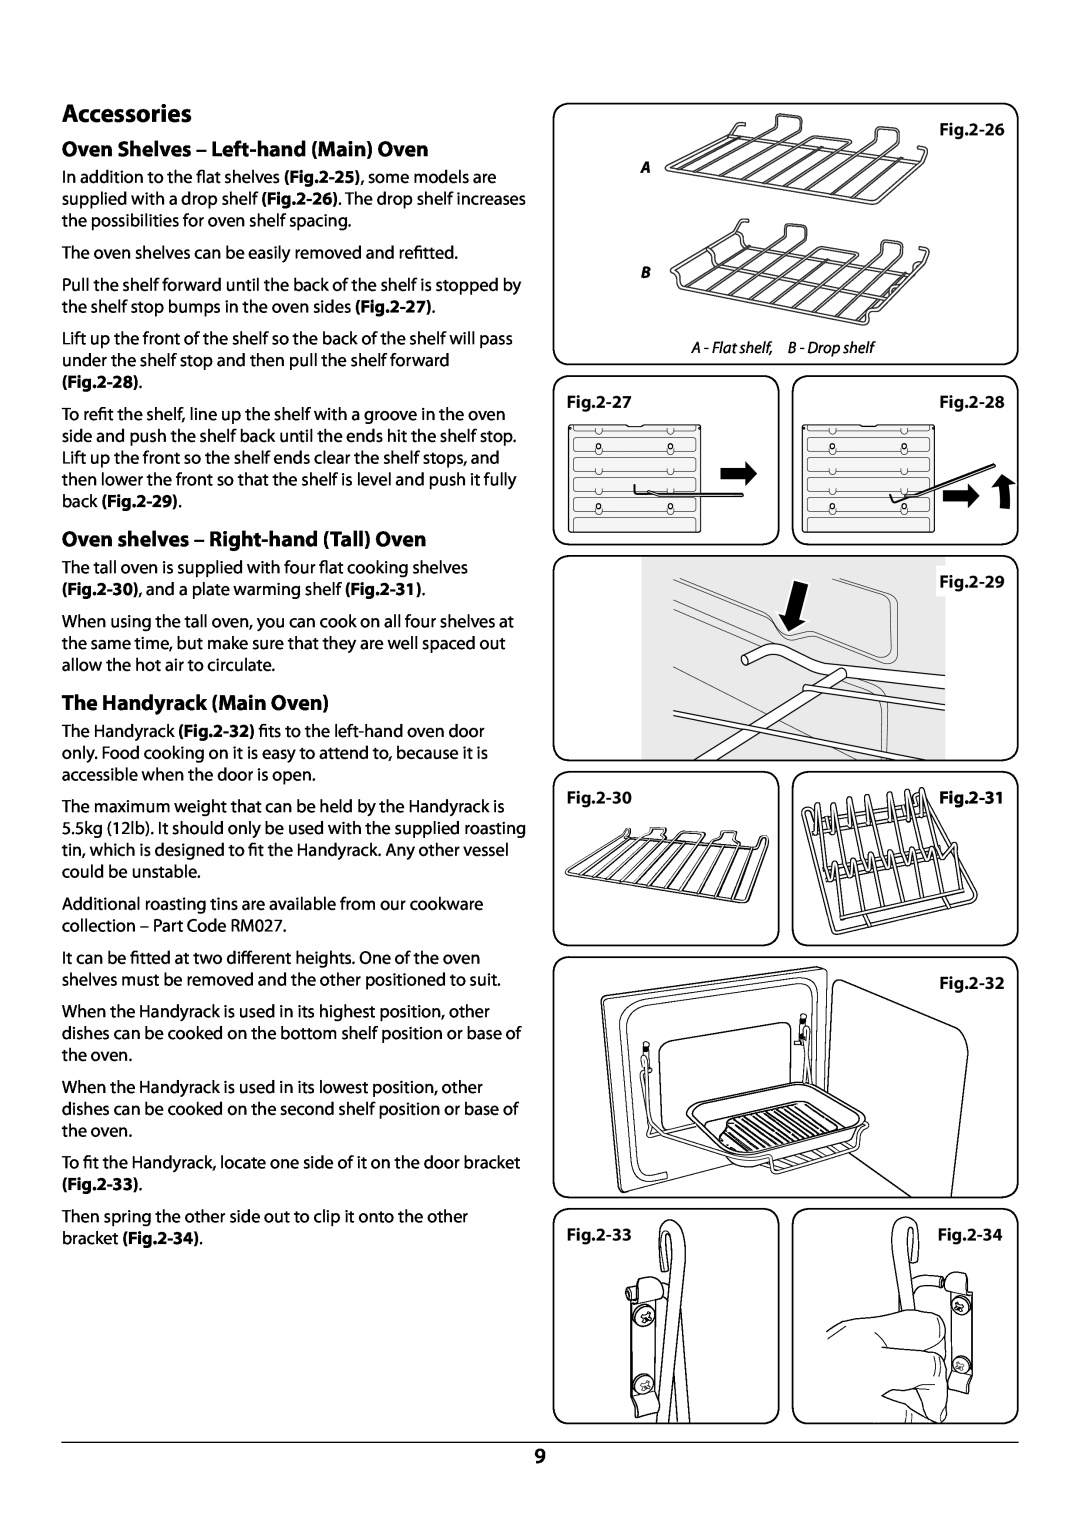 Rangemaster U109952 - 02 manual Accessories, Oven Shelves - Left-hand Main Oven, Oven shelves - Right-hand Tall Oven, 30 